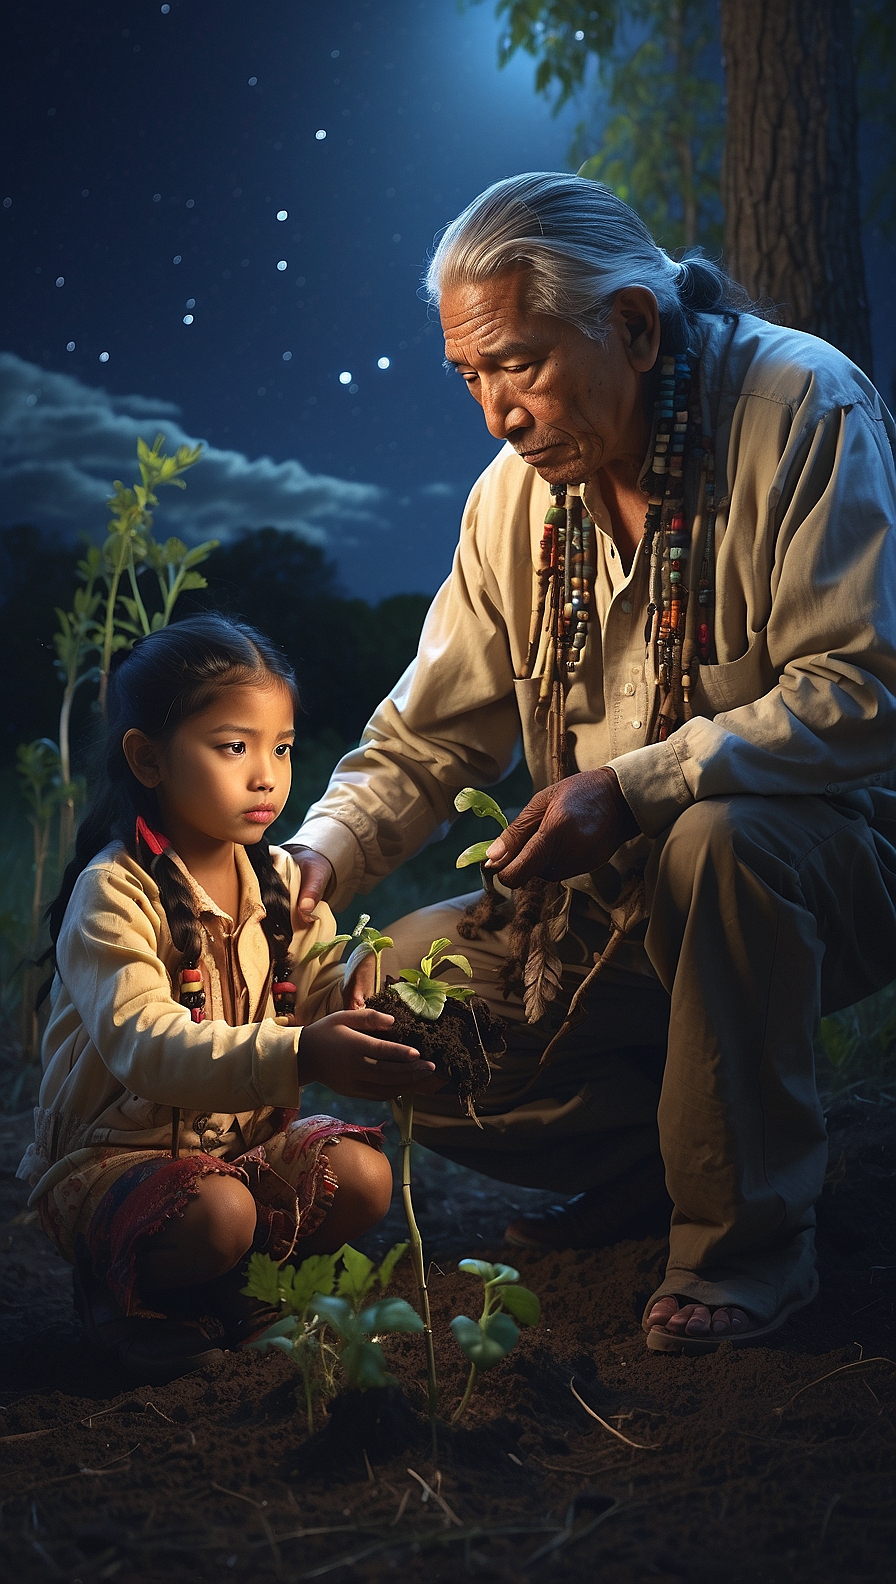 Default Create an image of a Native American elder teaching a 3